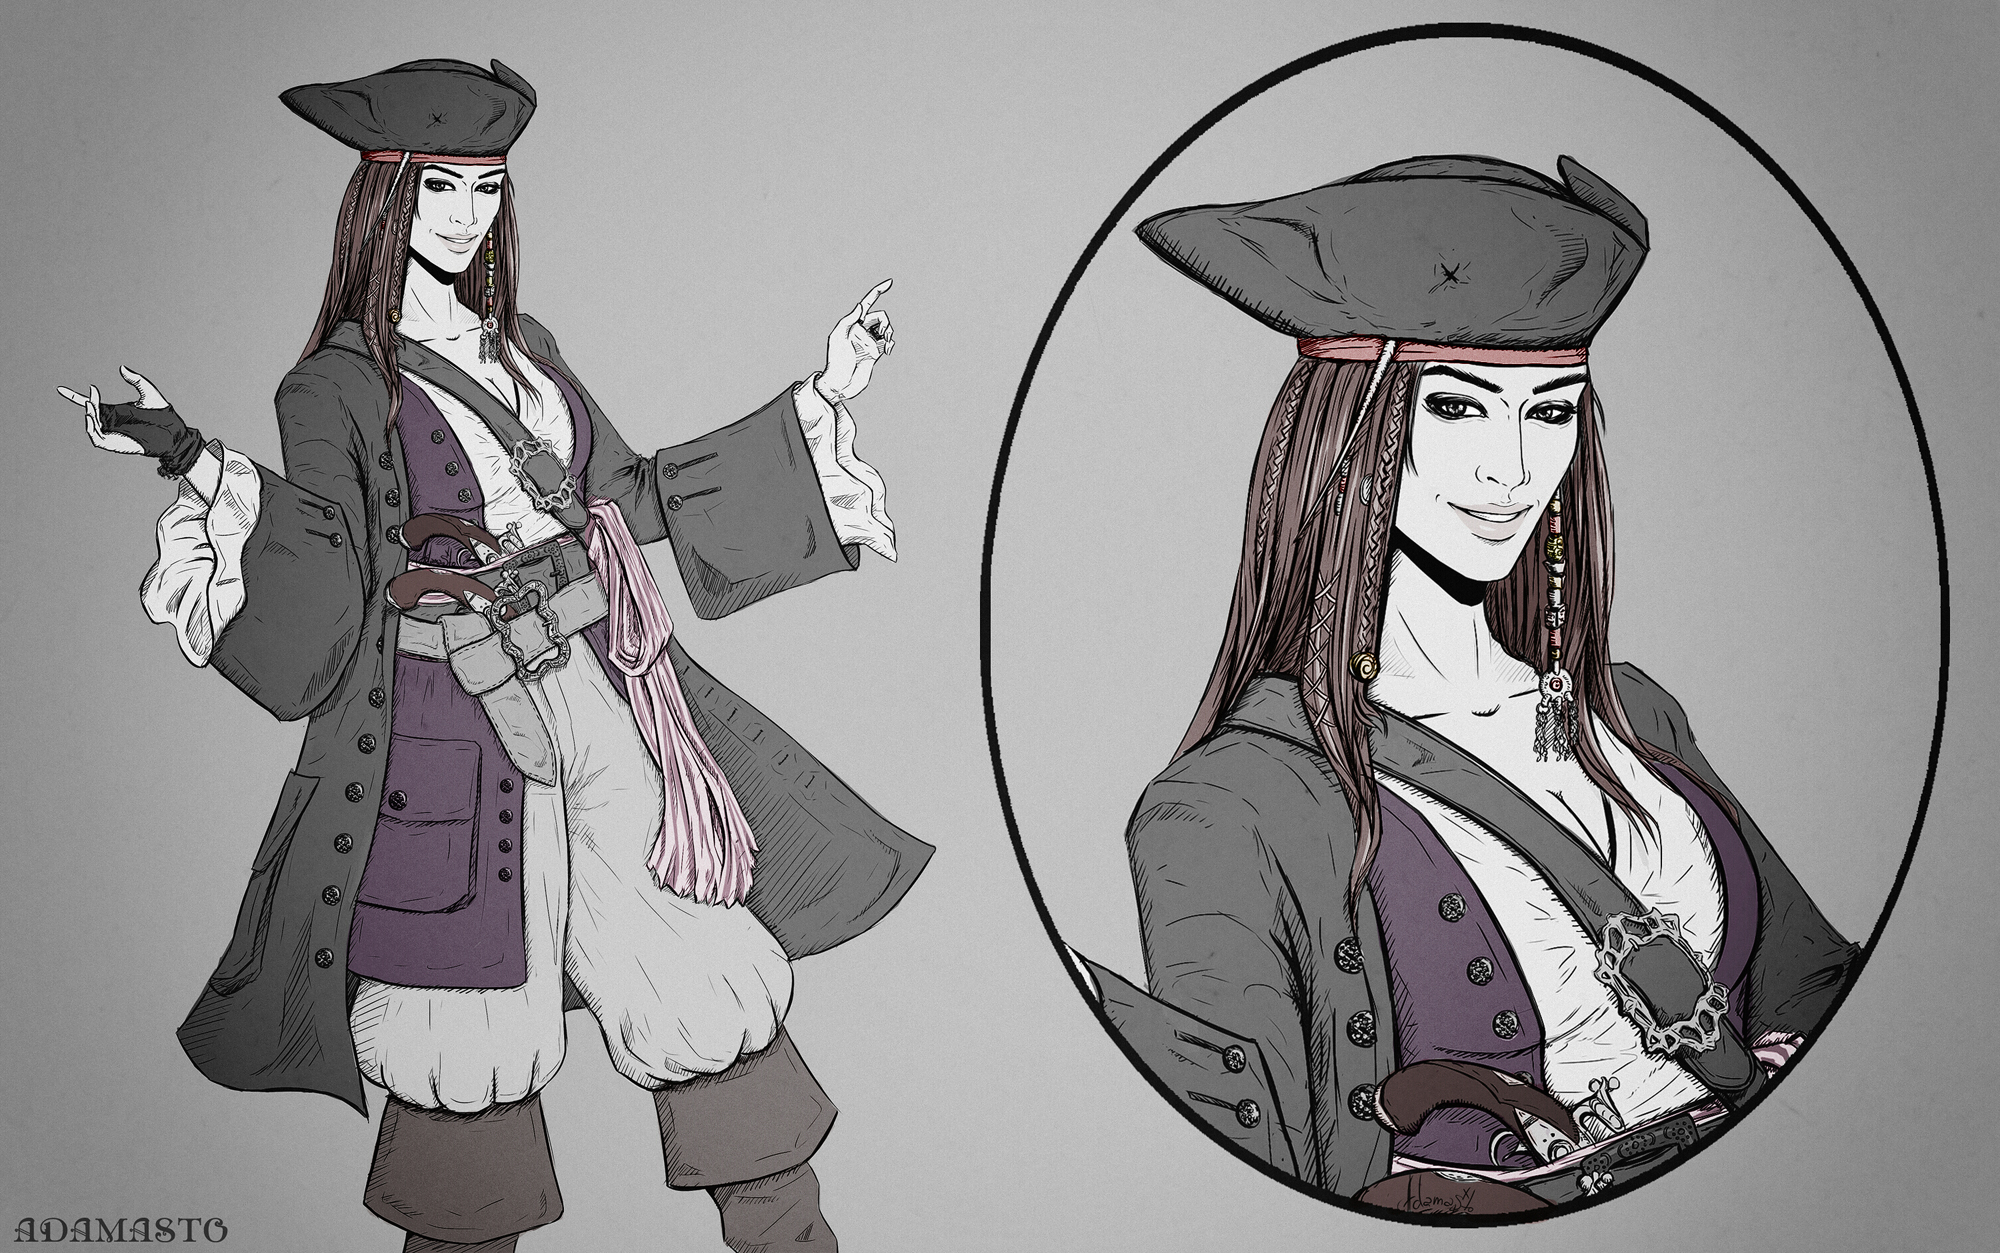 female!Captain Jack Sparrow by AdamaSto on DeviantArt